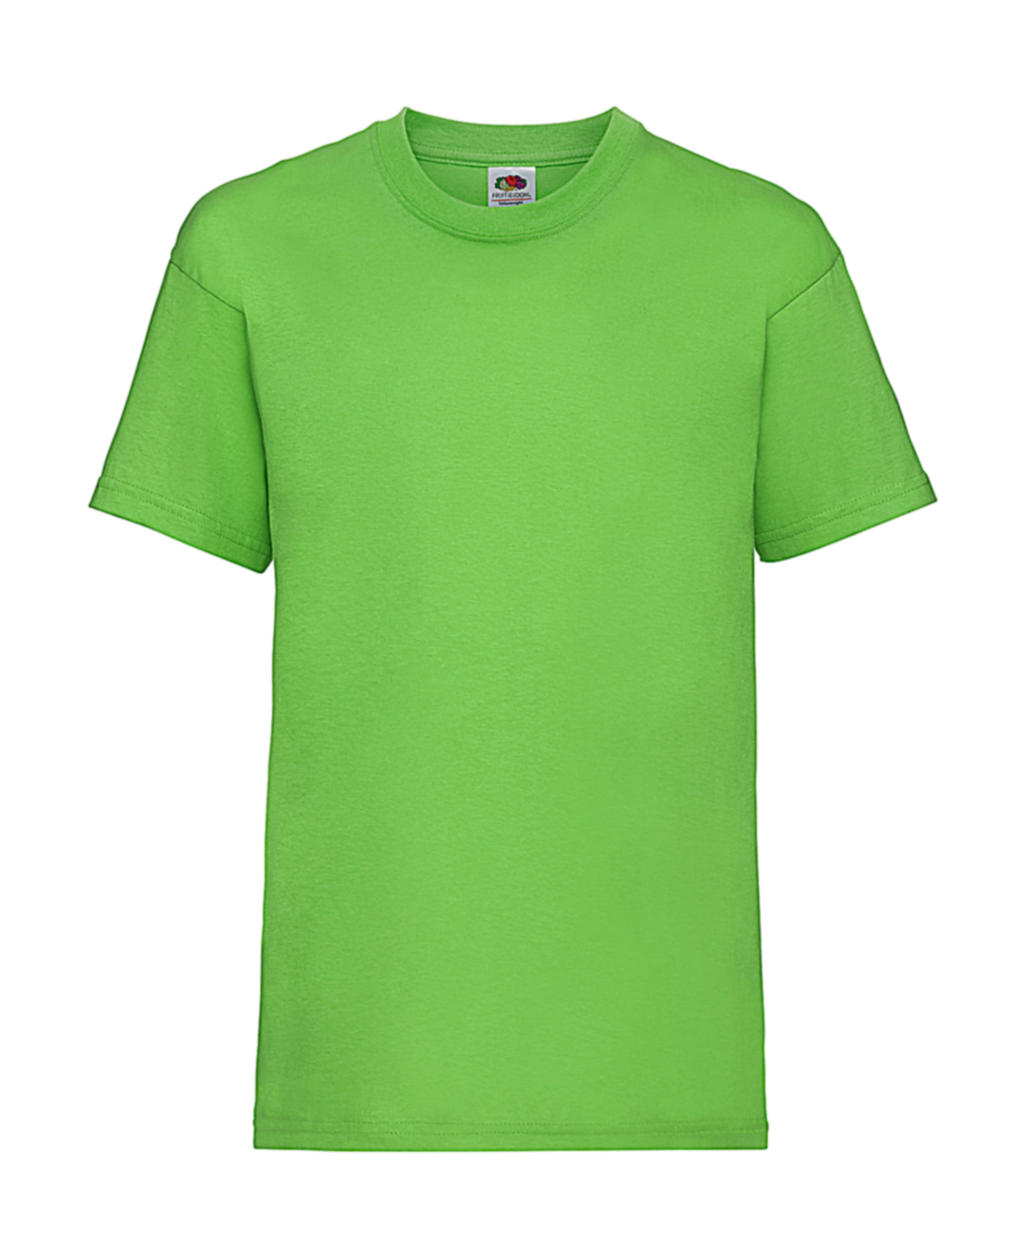 10er Pack Kinder T-Shirts FRUIT OF THE LOOM Kids Valueweight Tee 61-033-0  NEU | eBay